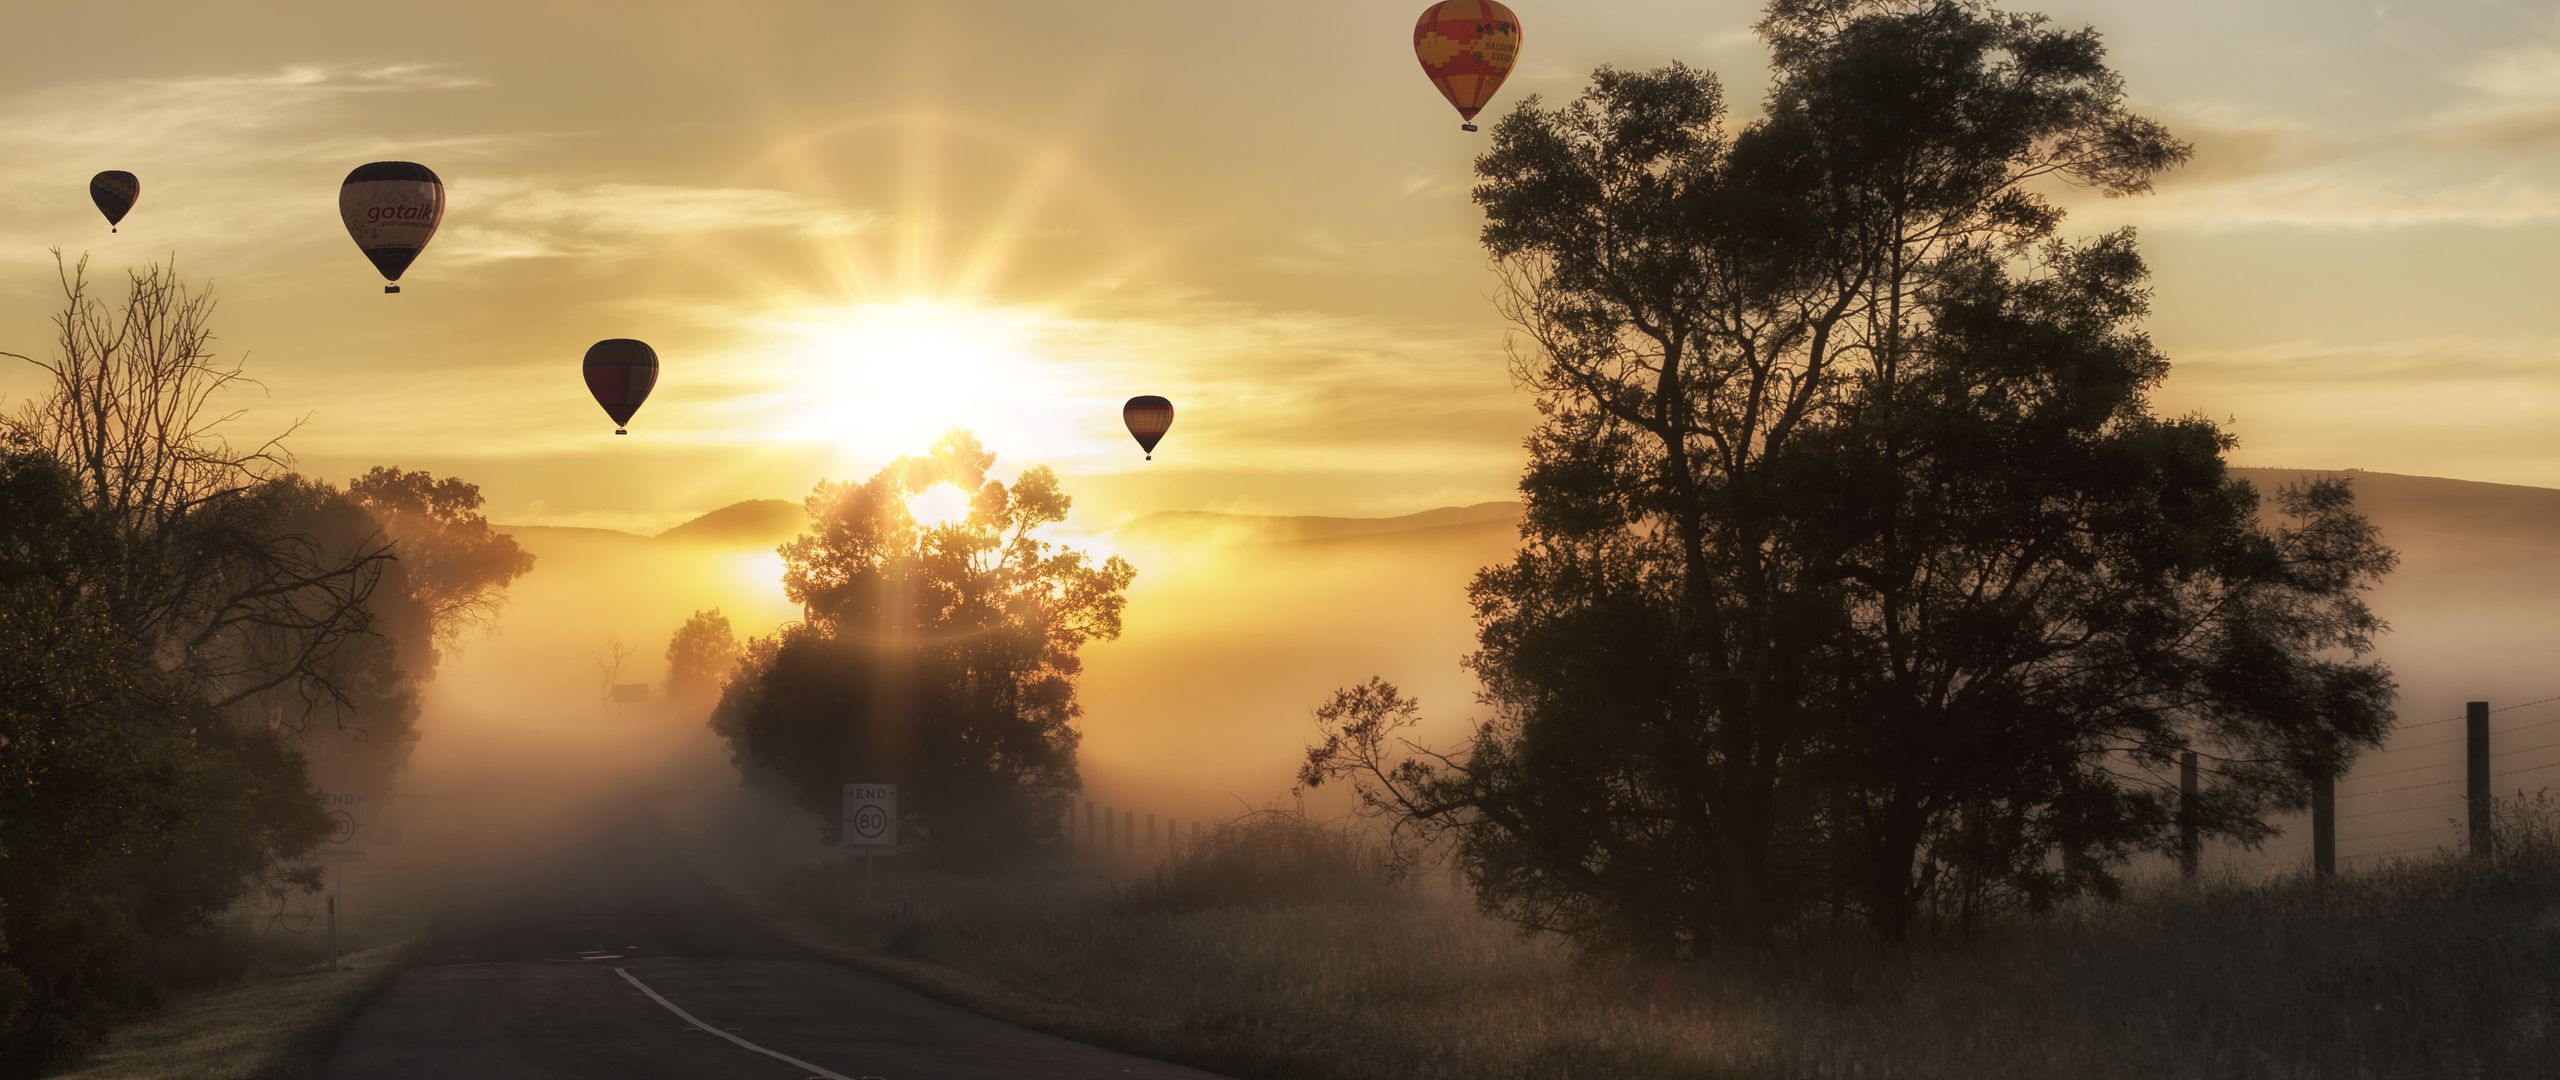 Воздушный шар на дороге. Воздушный шар на закате. Дорога с воздушным шаром. Воздушный шар в тумане.